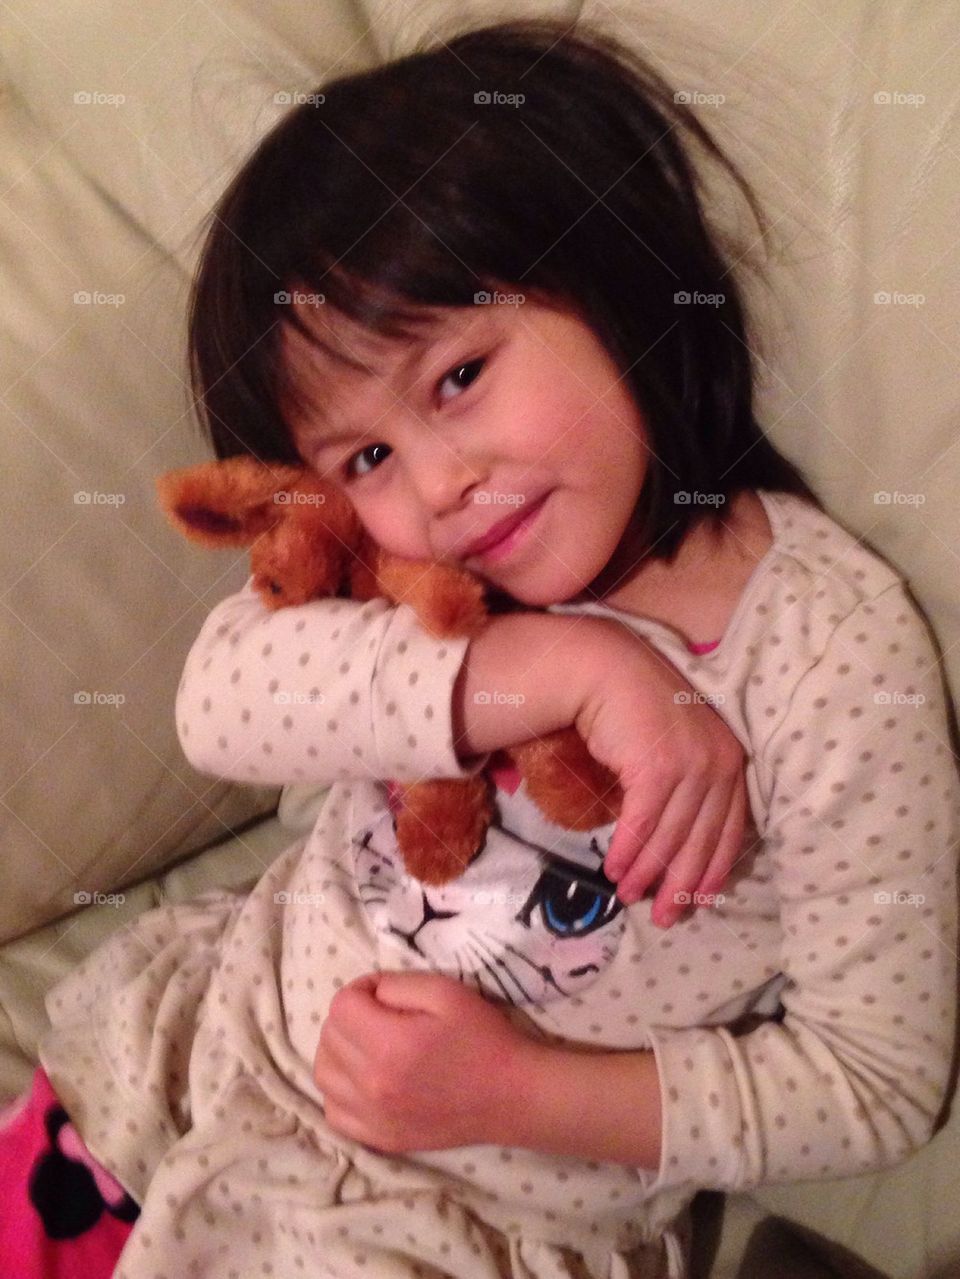 A girl and her stuffed animal